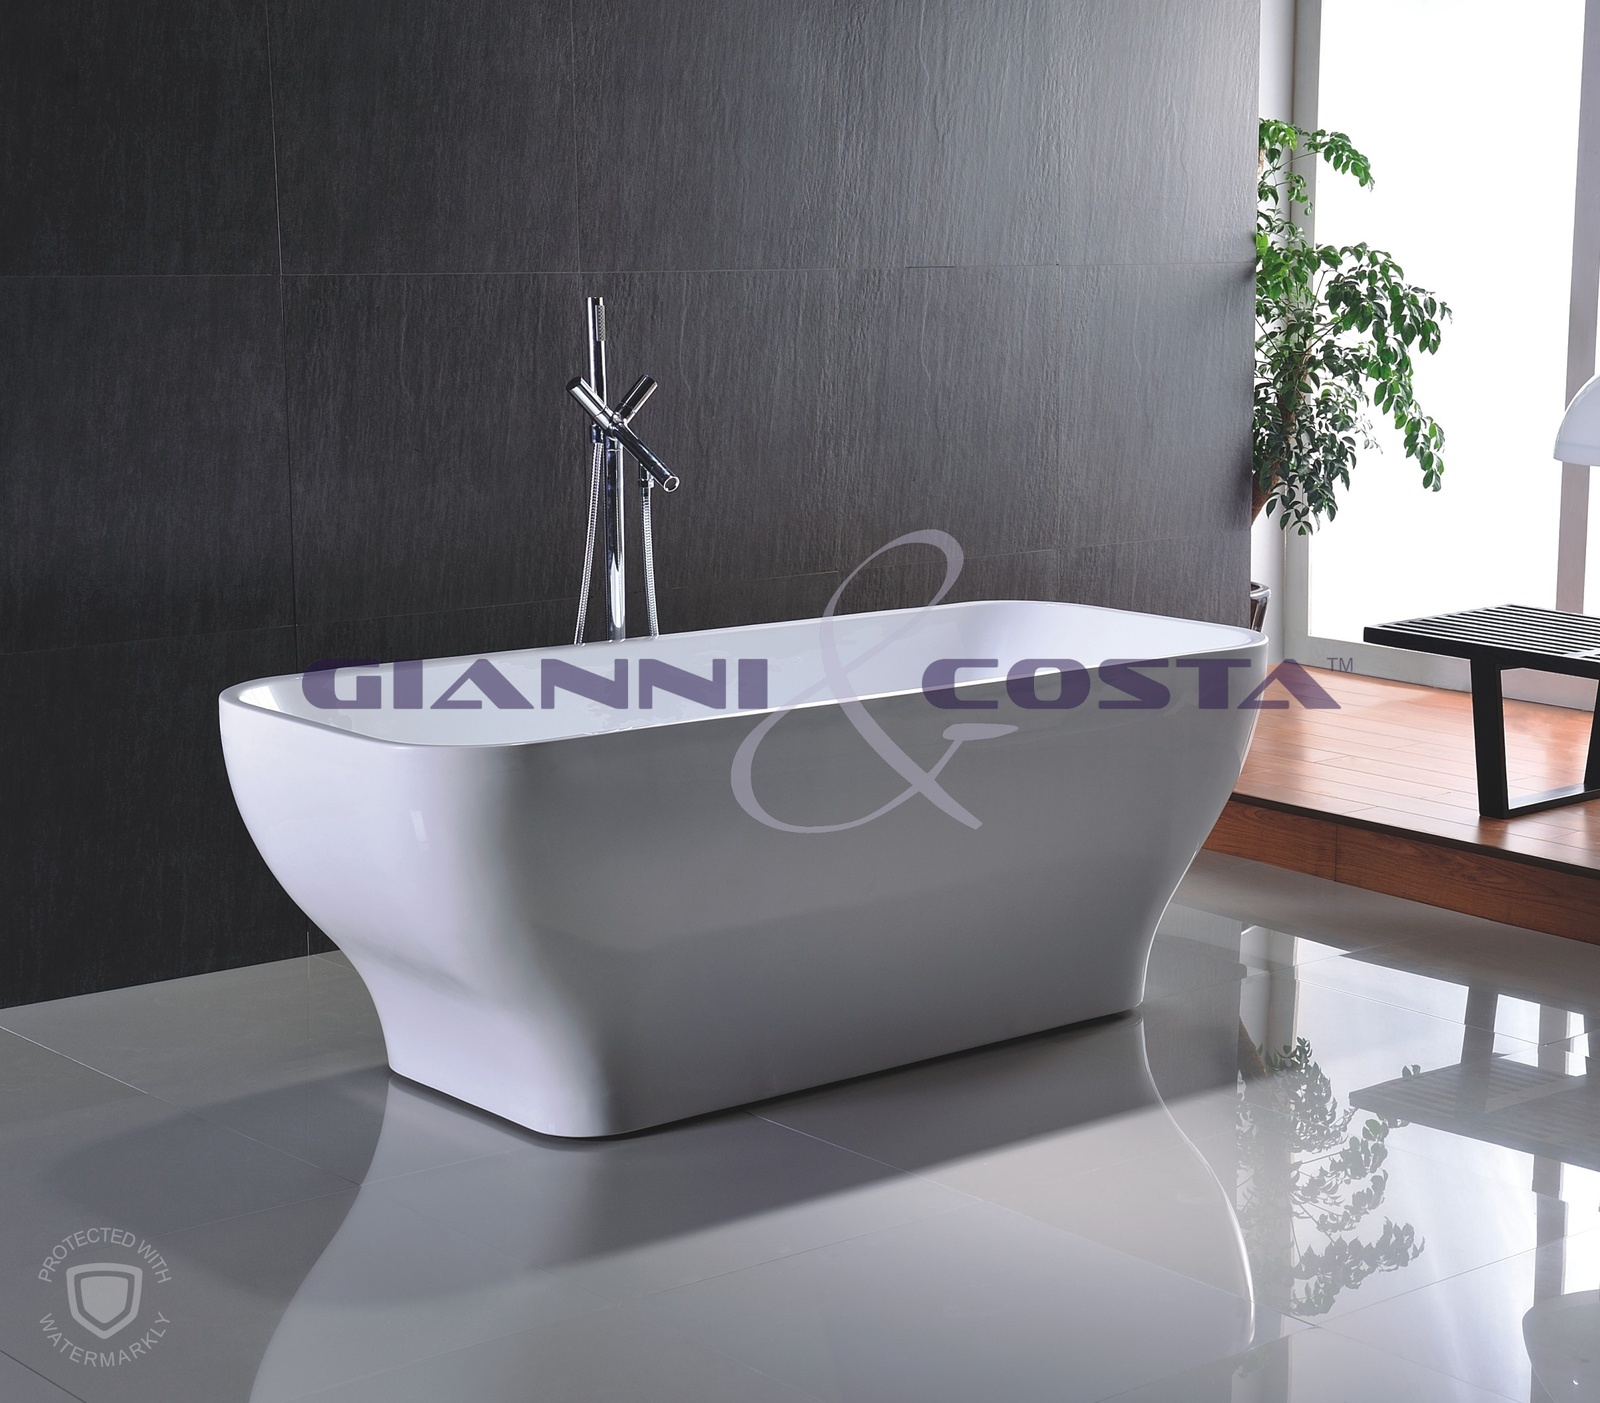 Acrylic Free Standing Bath Tub Model Xander GC6829 1700mm